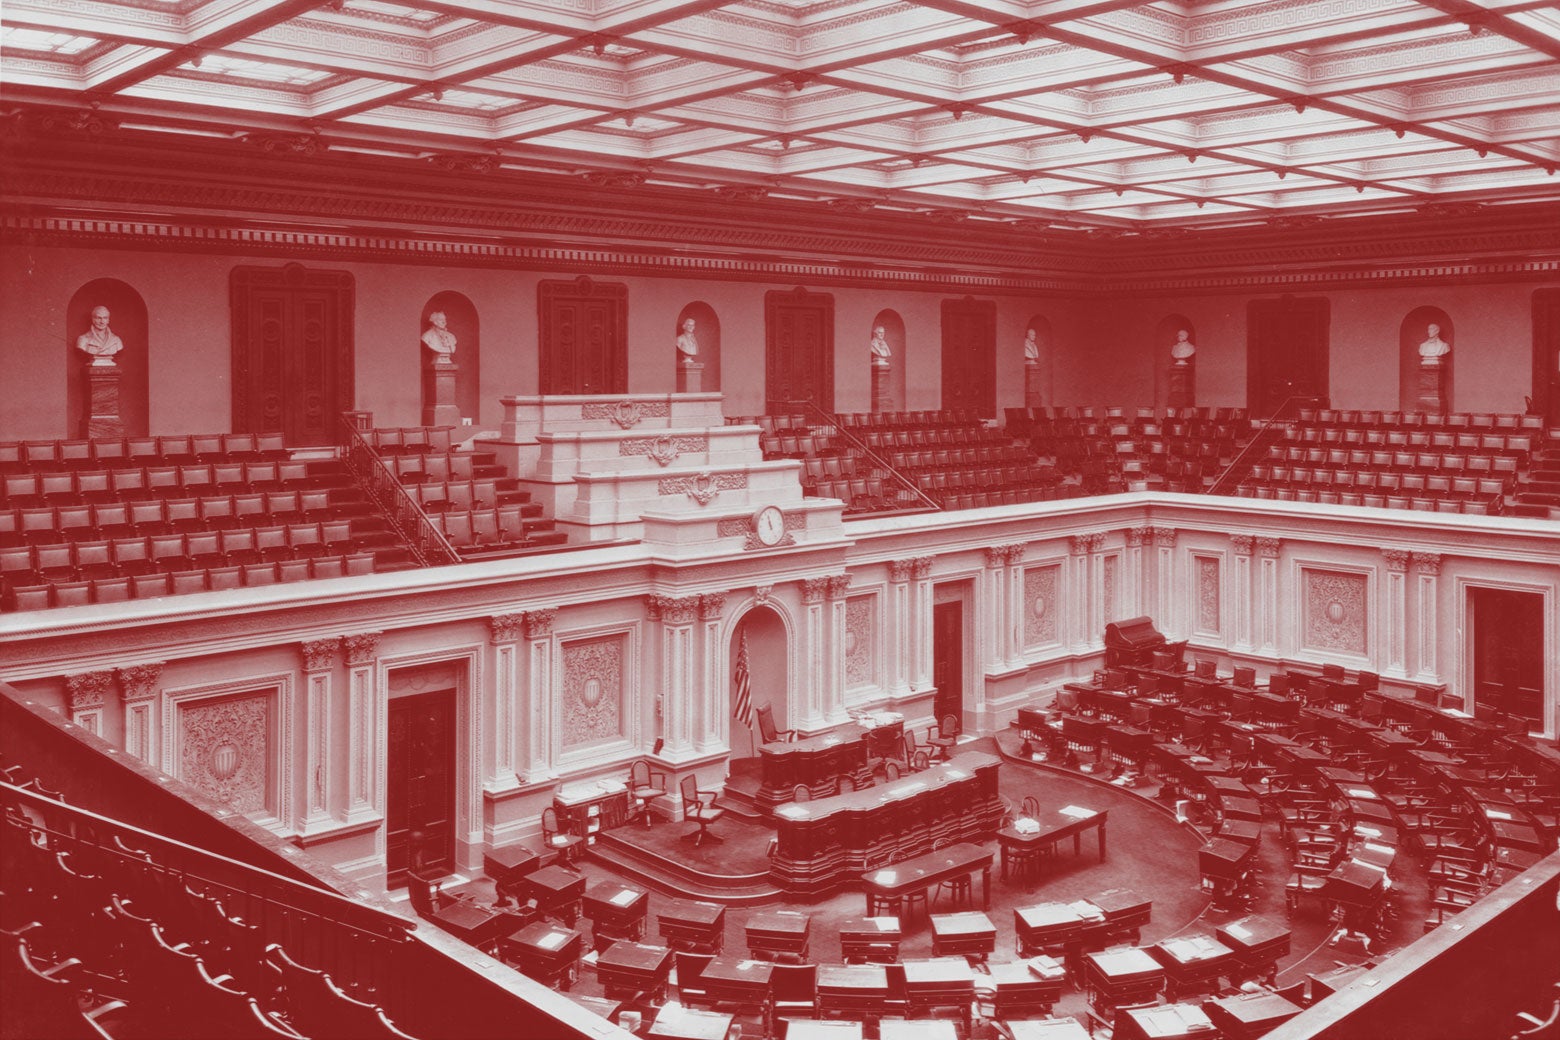 The Senate chamber in the U.S. Capitol.